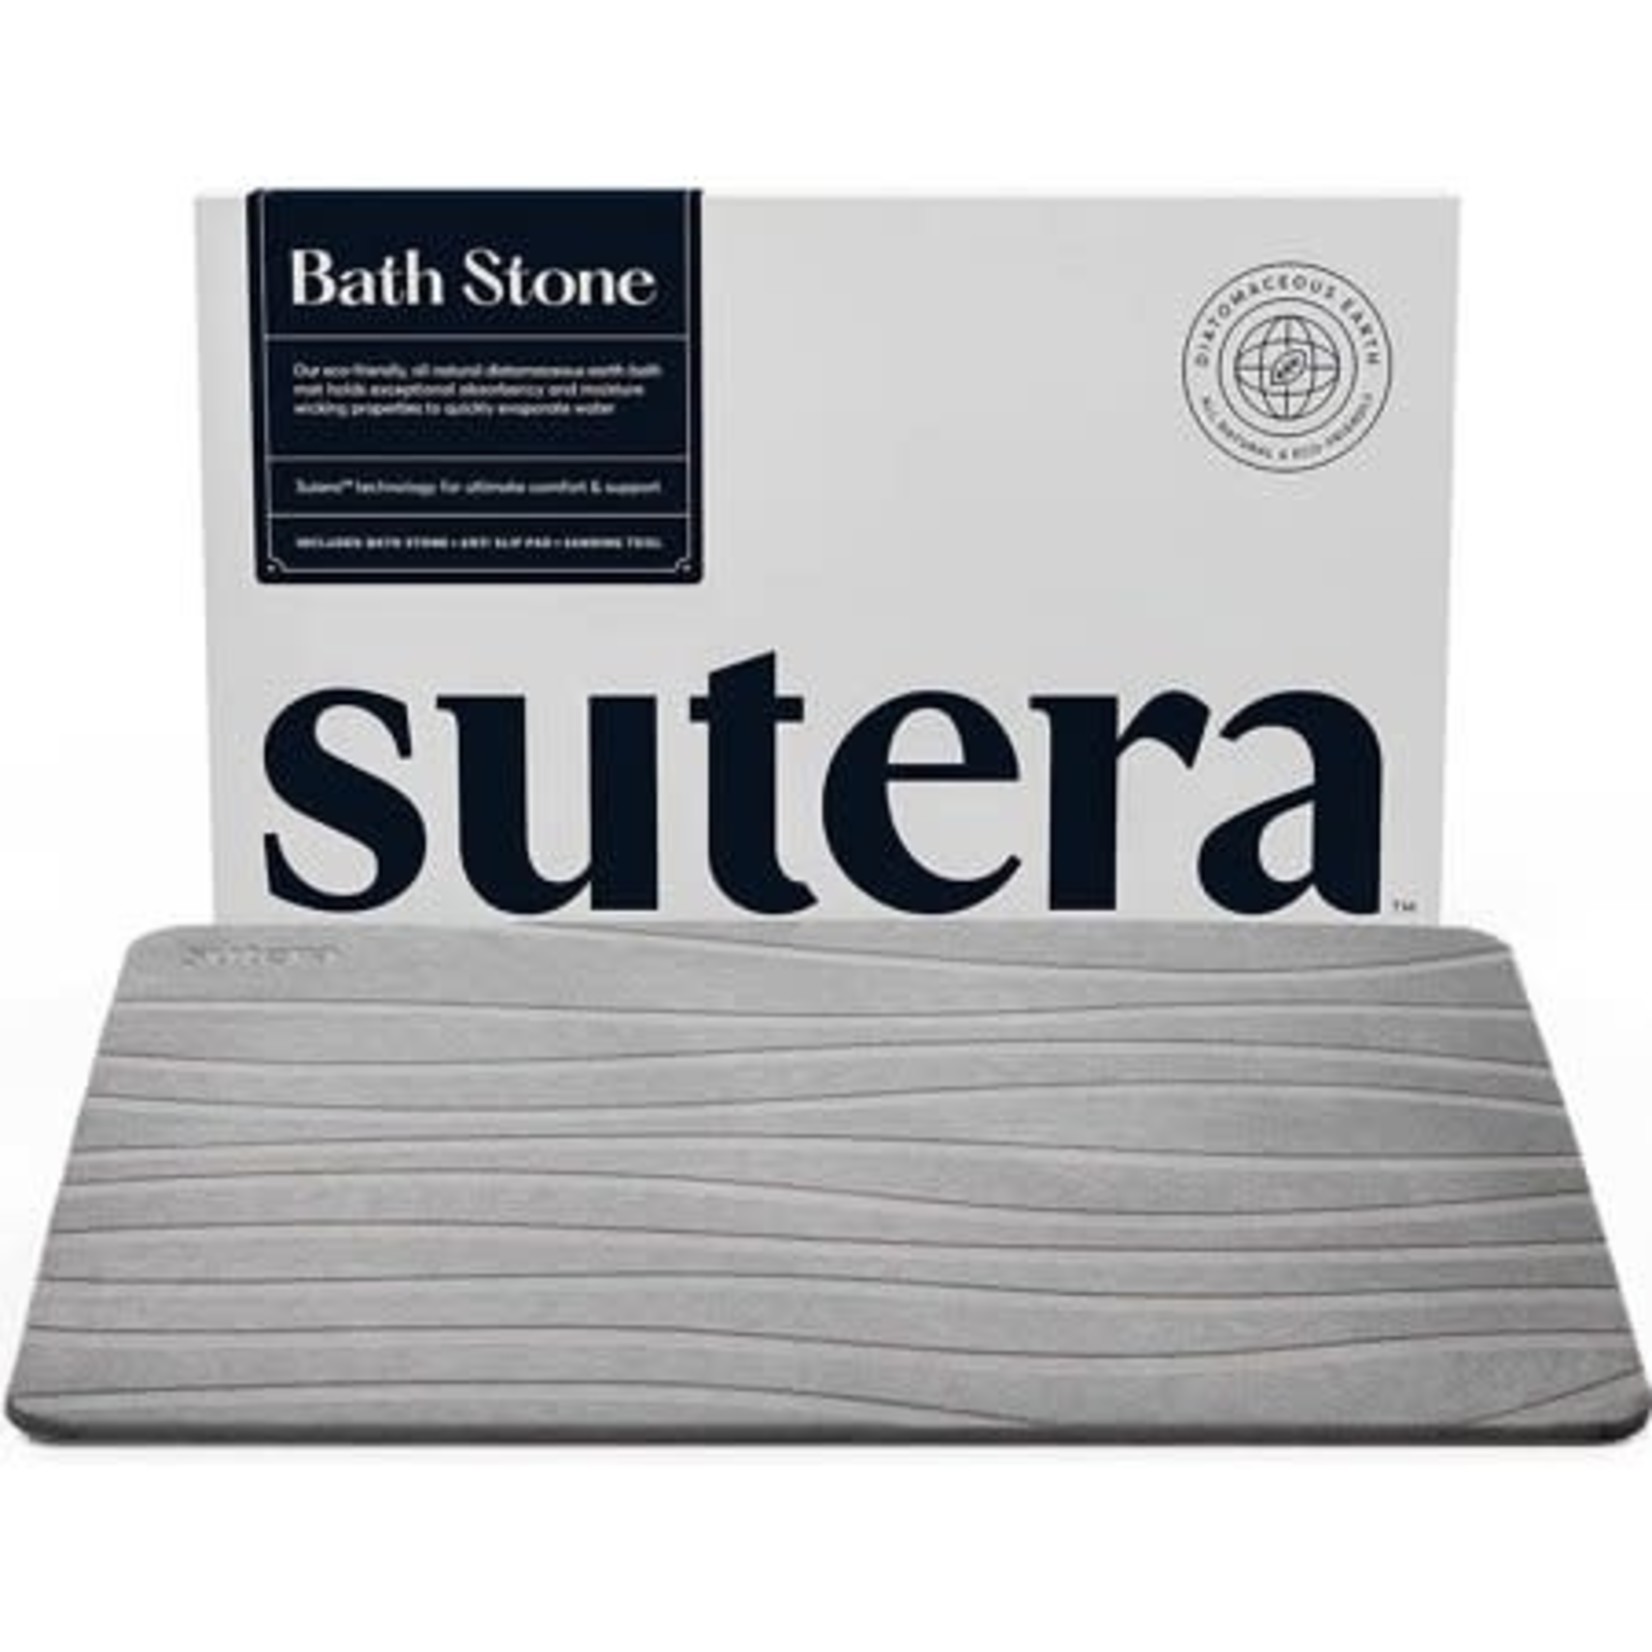 Sutera Stone Bathmat - 23.5 X 15 - Gray